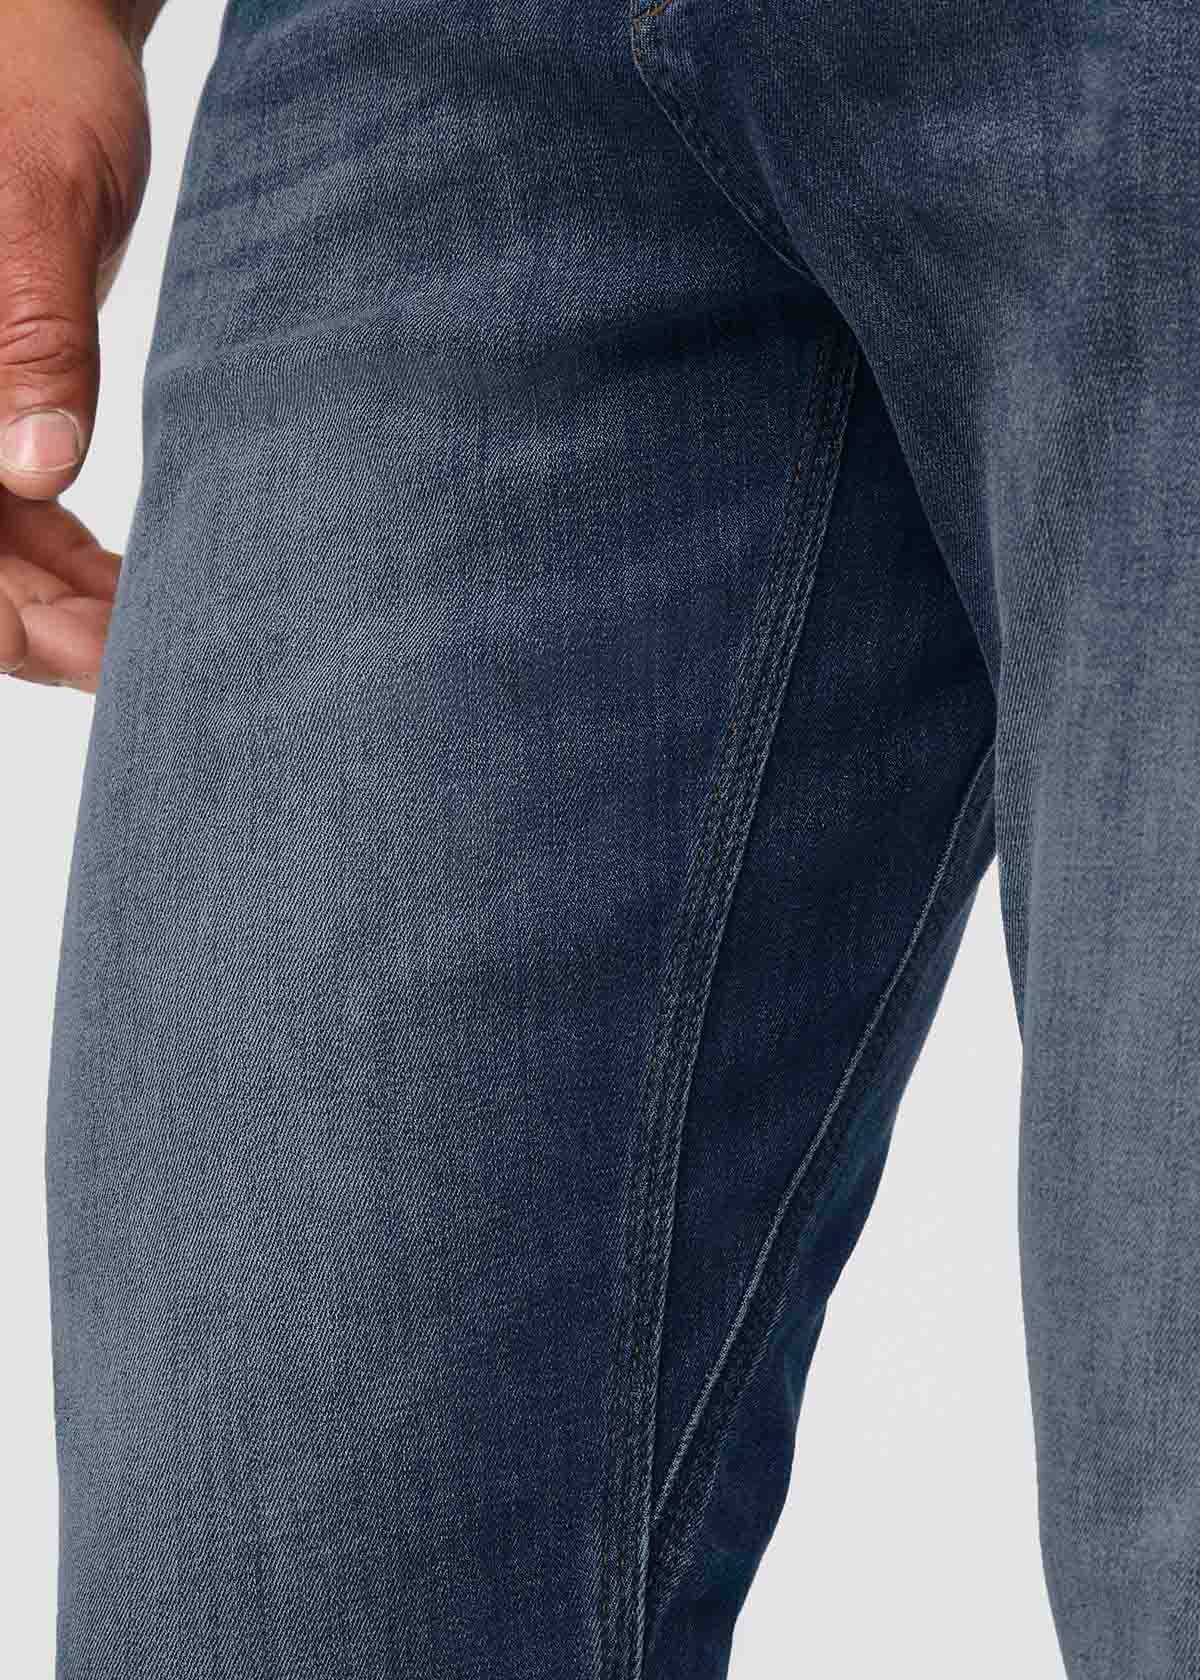 Loose Fit Men's Jeans - Medium Wash